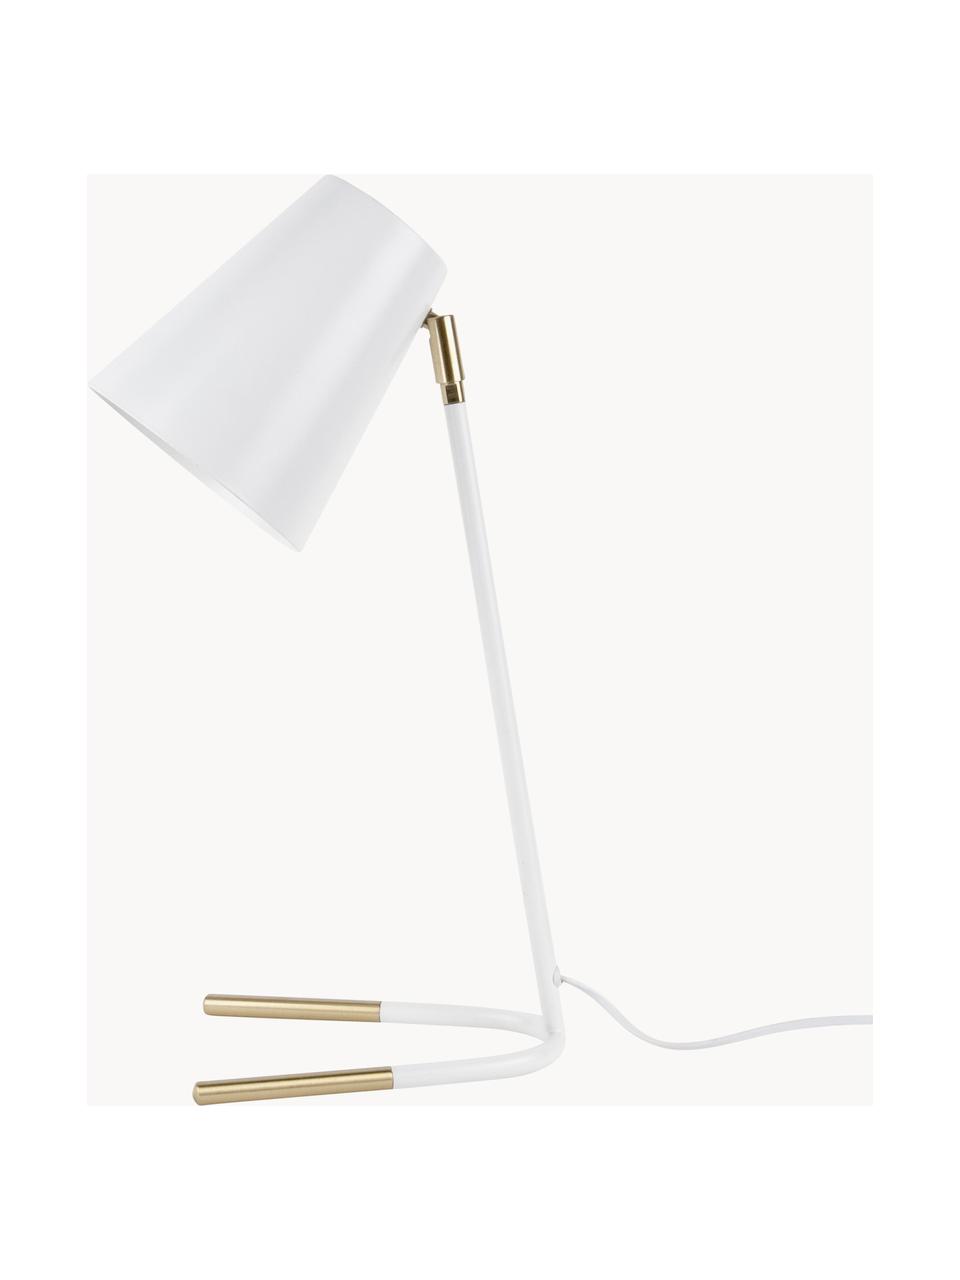 Schreibtischlampe Noble, Lampenschirm: Metall, beschichtet, Lampenfuß: Metall, beschichtet, Weiß, Goldfarben, B 25 x H 46 cm